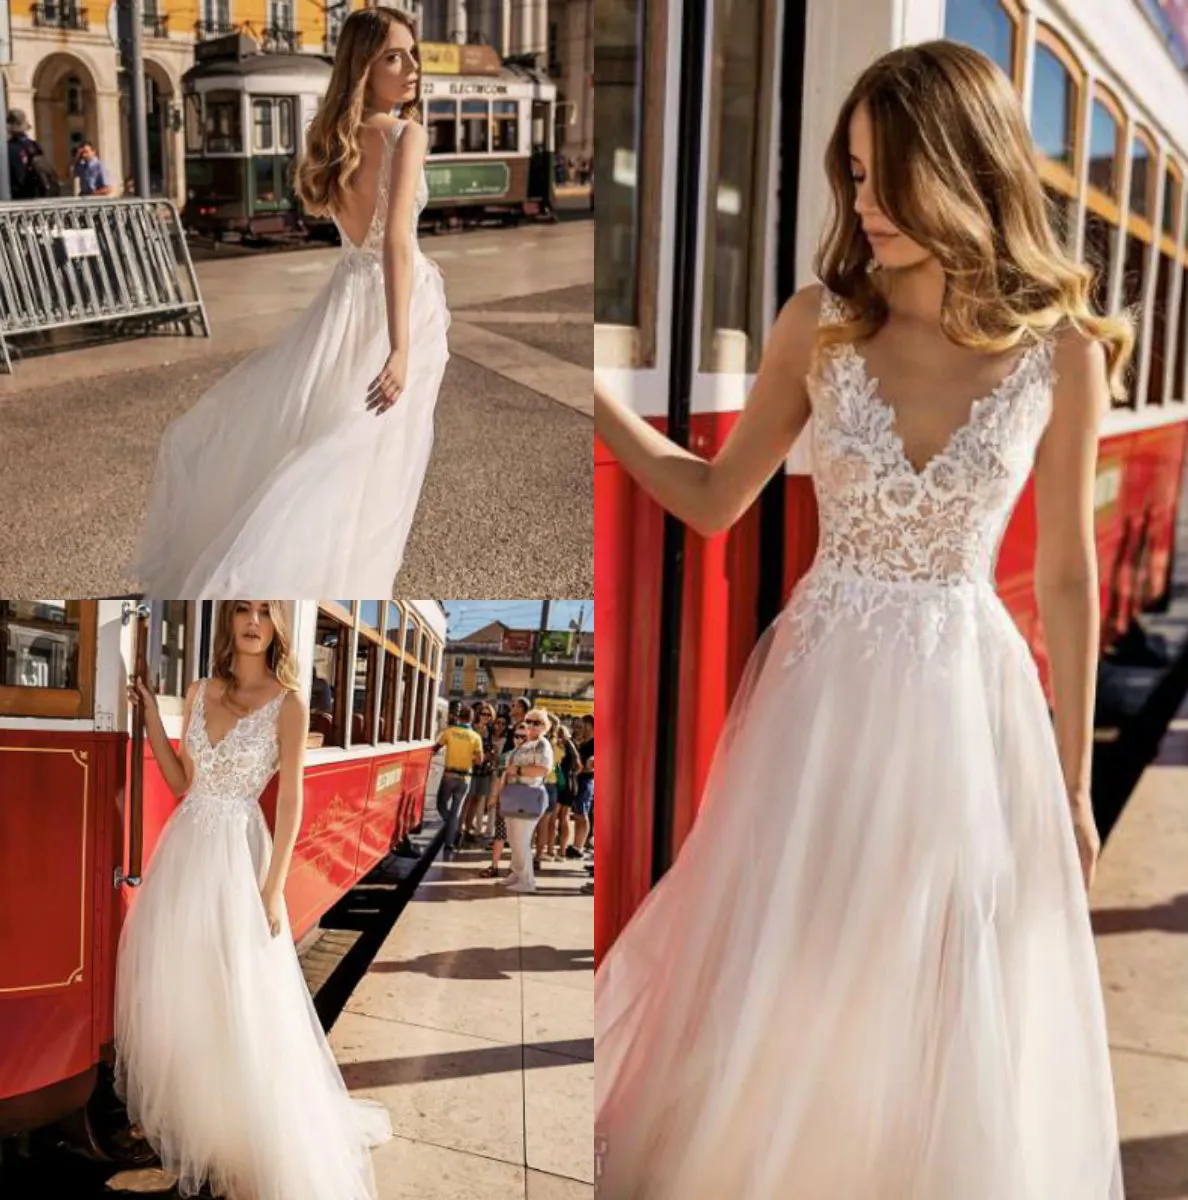 2019 Boho Wedding Dresses V Neck Lace Bridal Gowns Flow Tulle Skirt Backless robe de mariee Wedding Dress Cheap